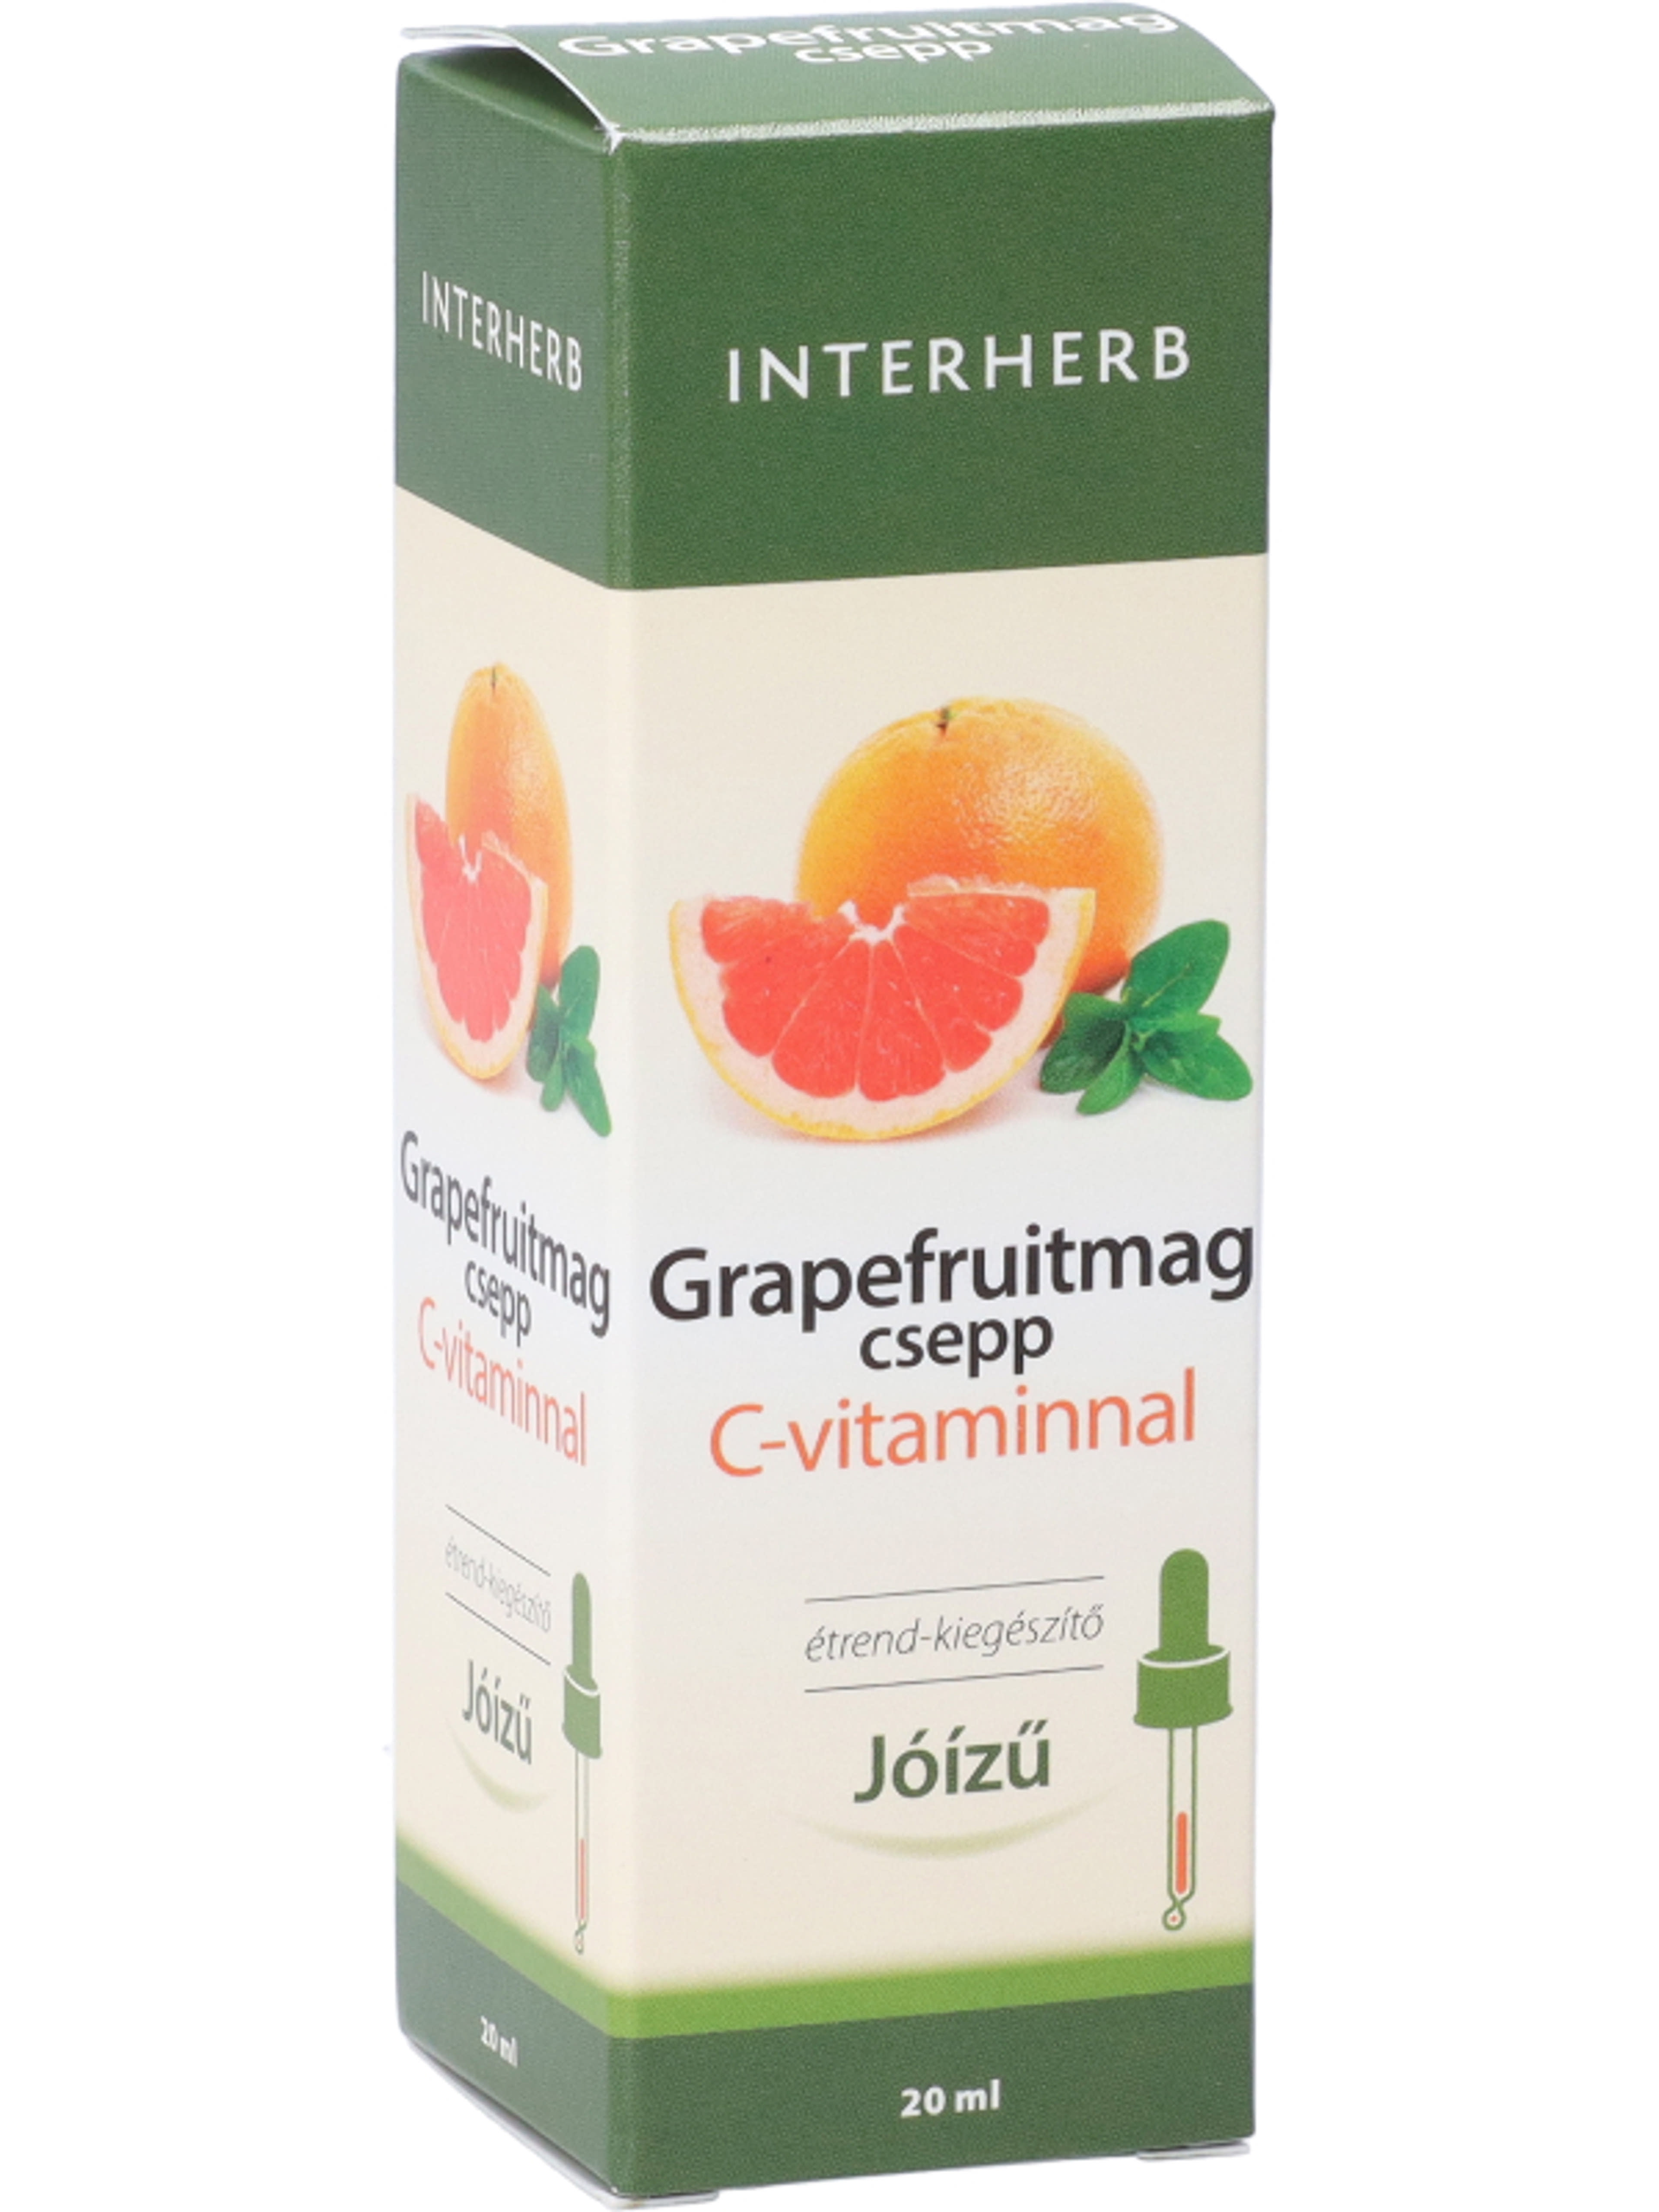 Interherb Grapefruitmag C-Vitaminnal Csepp - 20 ml-2